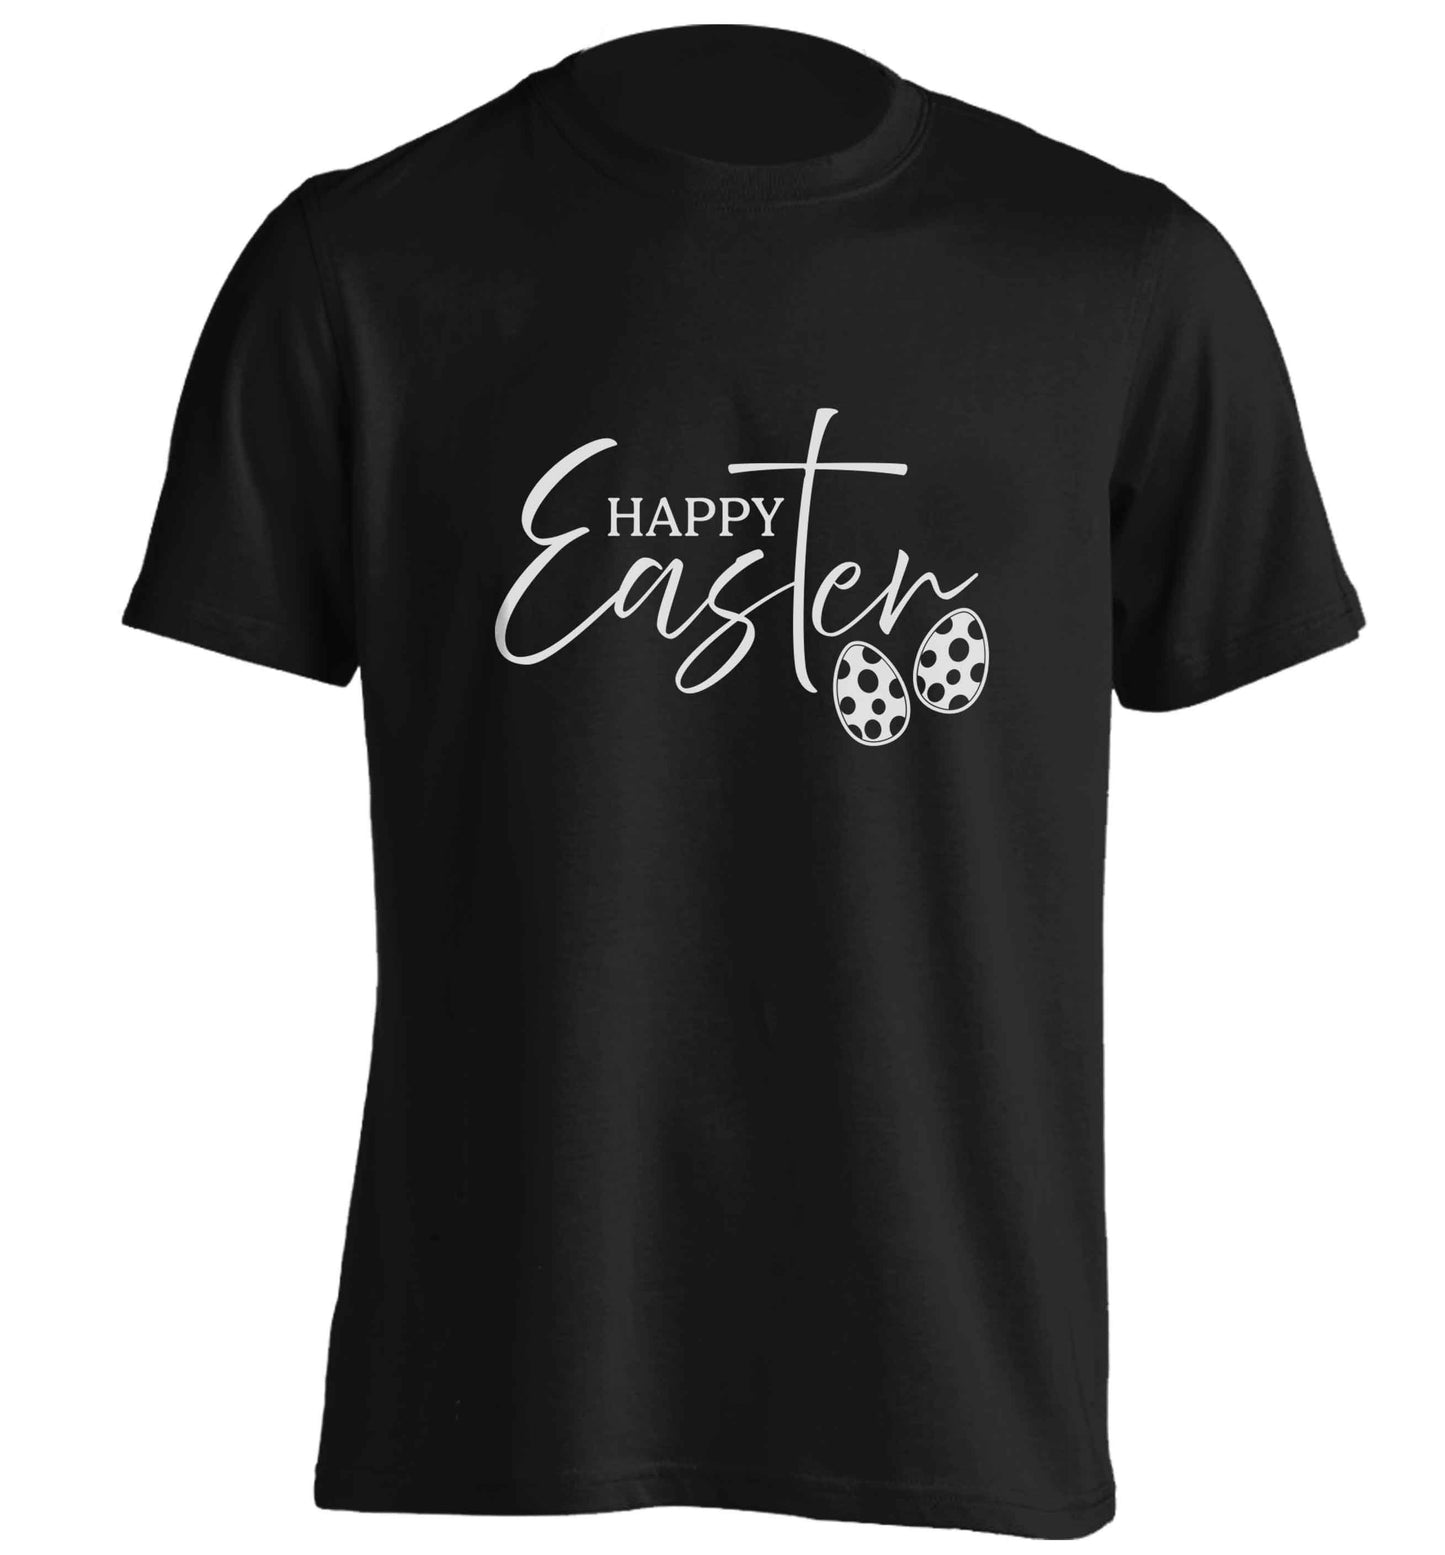 Happy Easter adults unisex black Tshirt 2XL